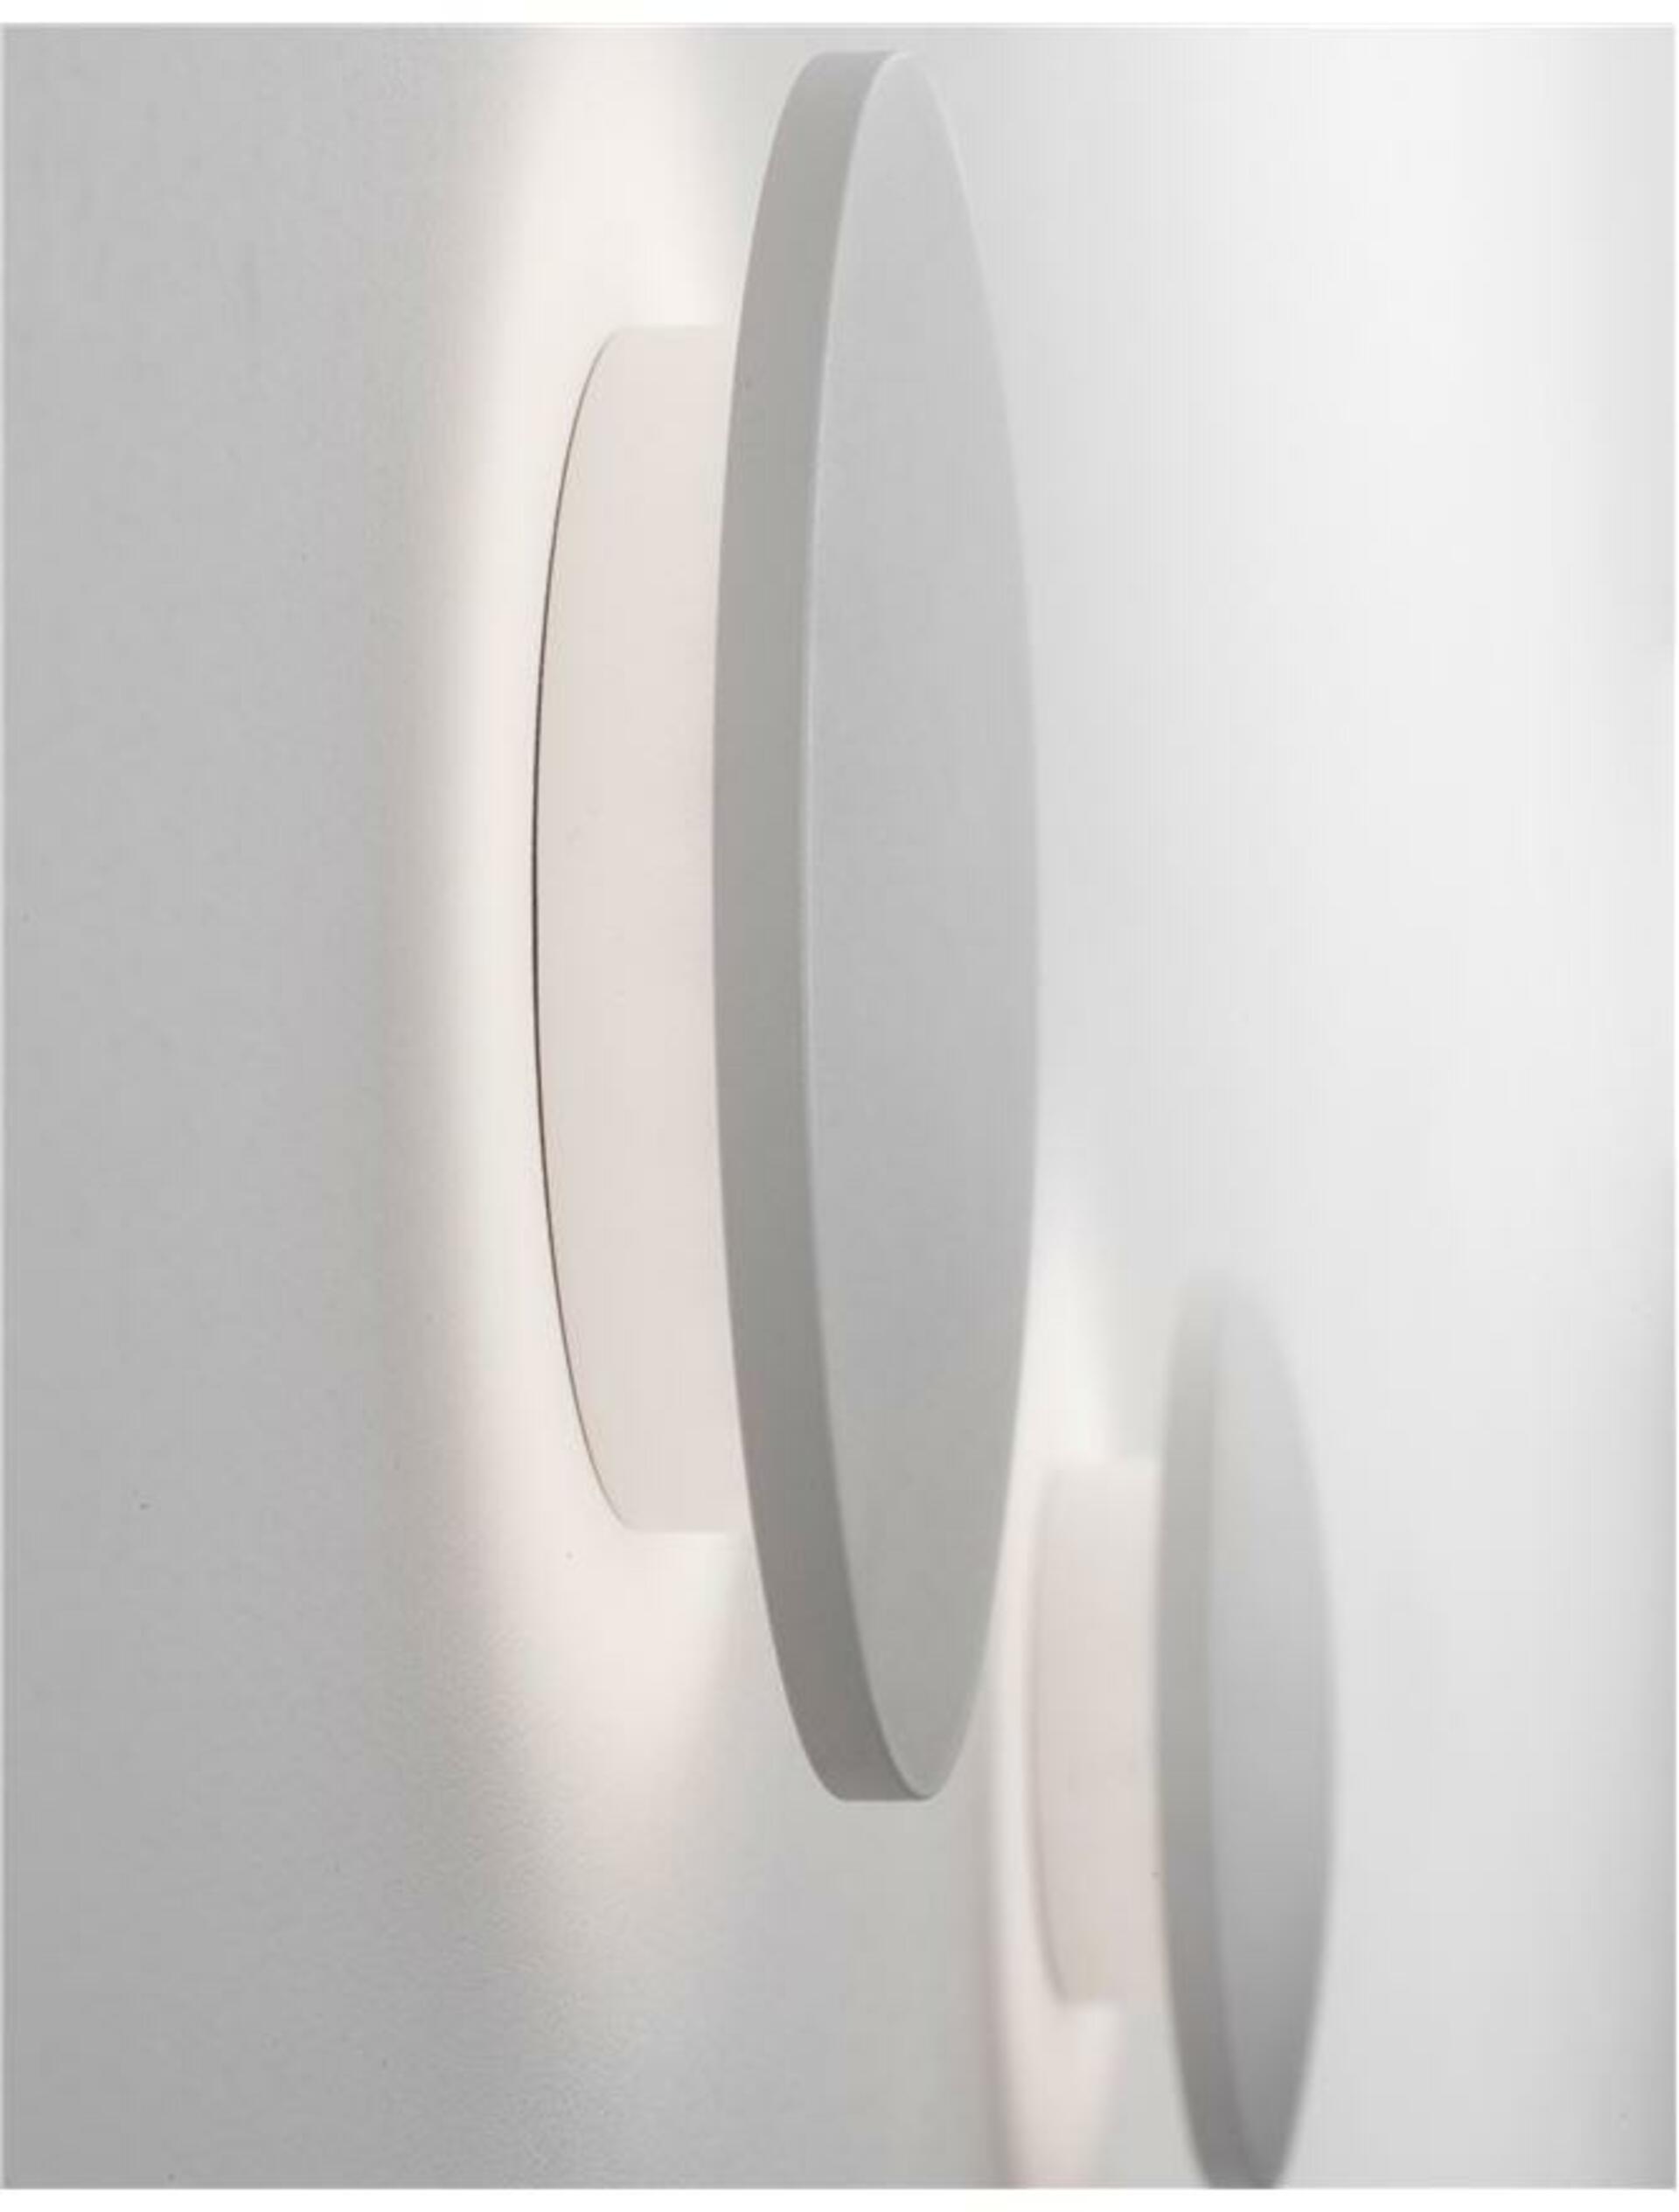 NOVA LUCE nástěnné svítidlo ASTRID bílý kov a hliník akryl LED 6W 220-240V 3000K IP20 9130506